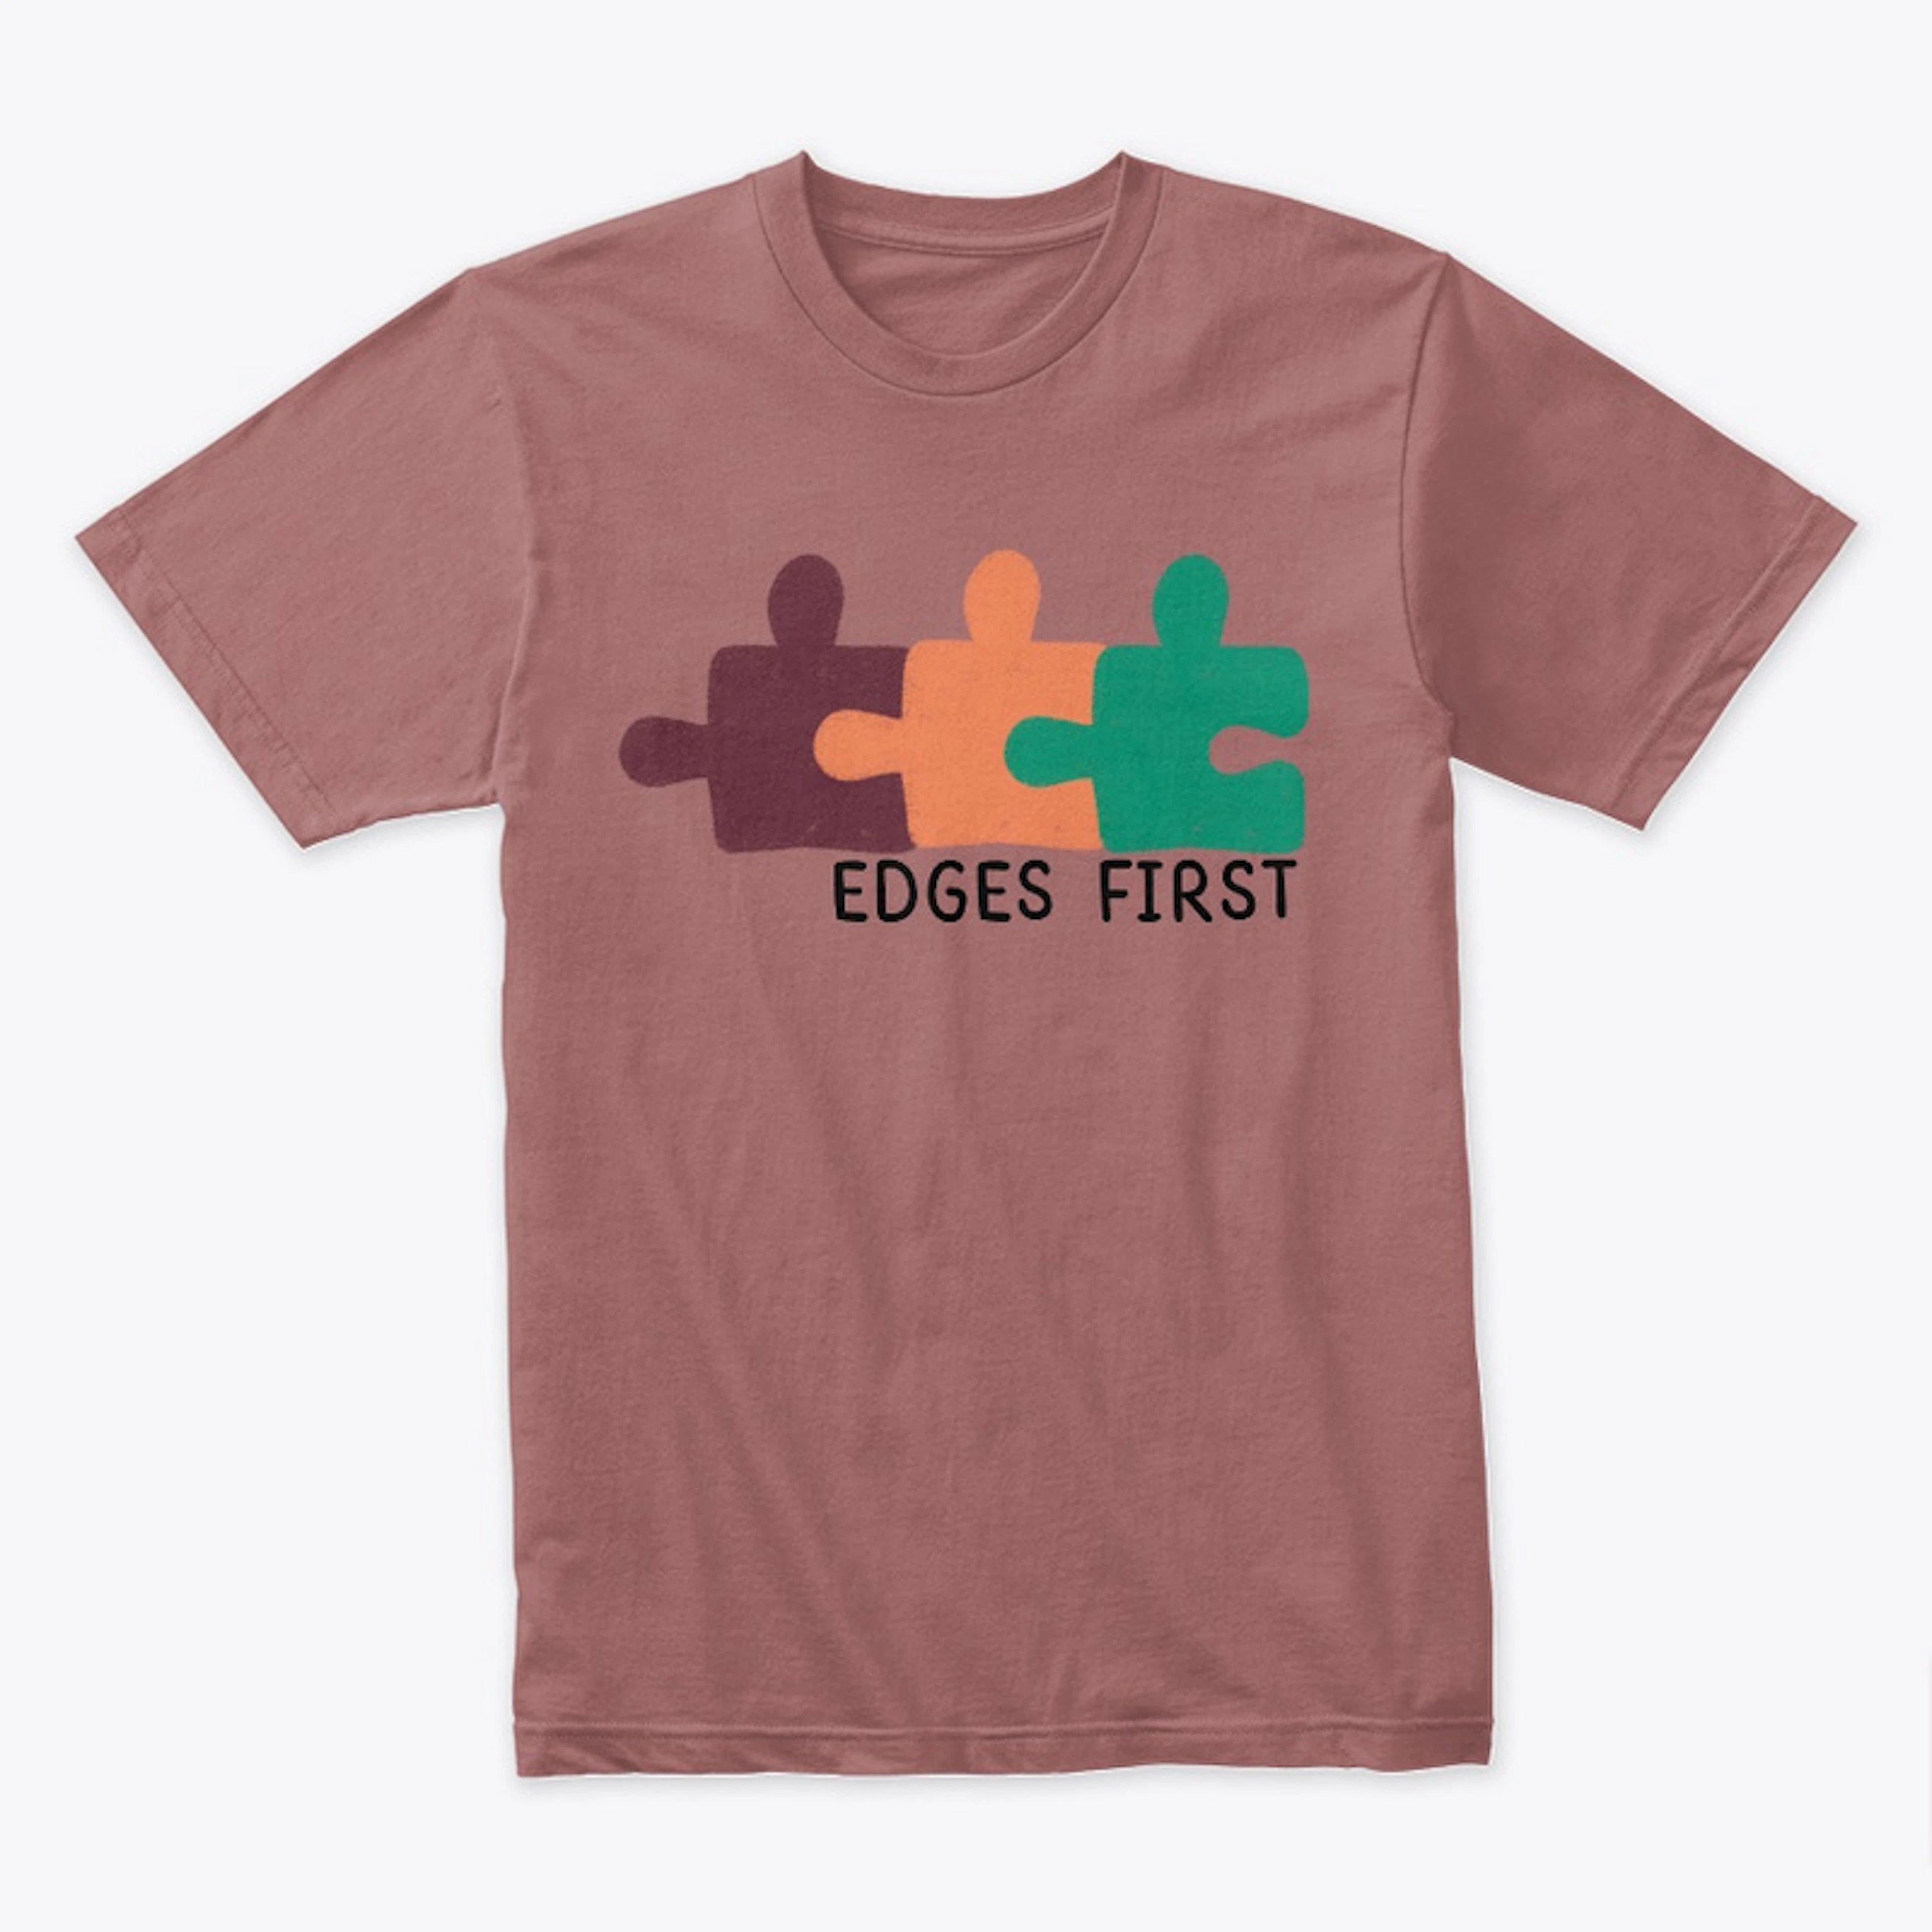 Edges First